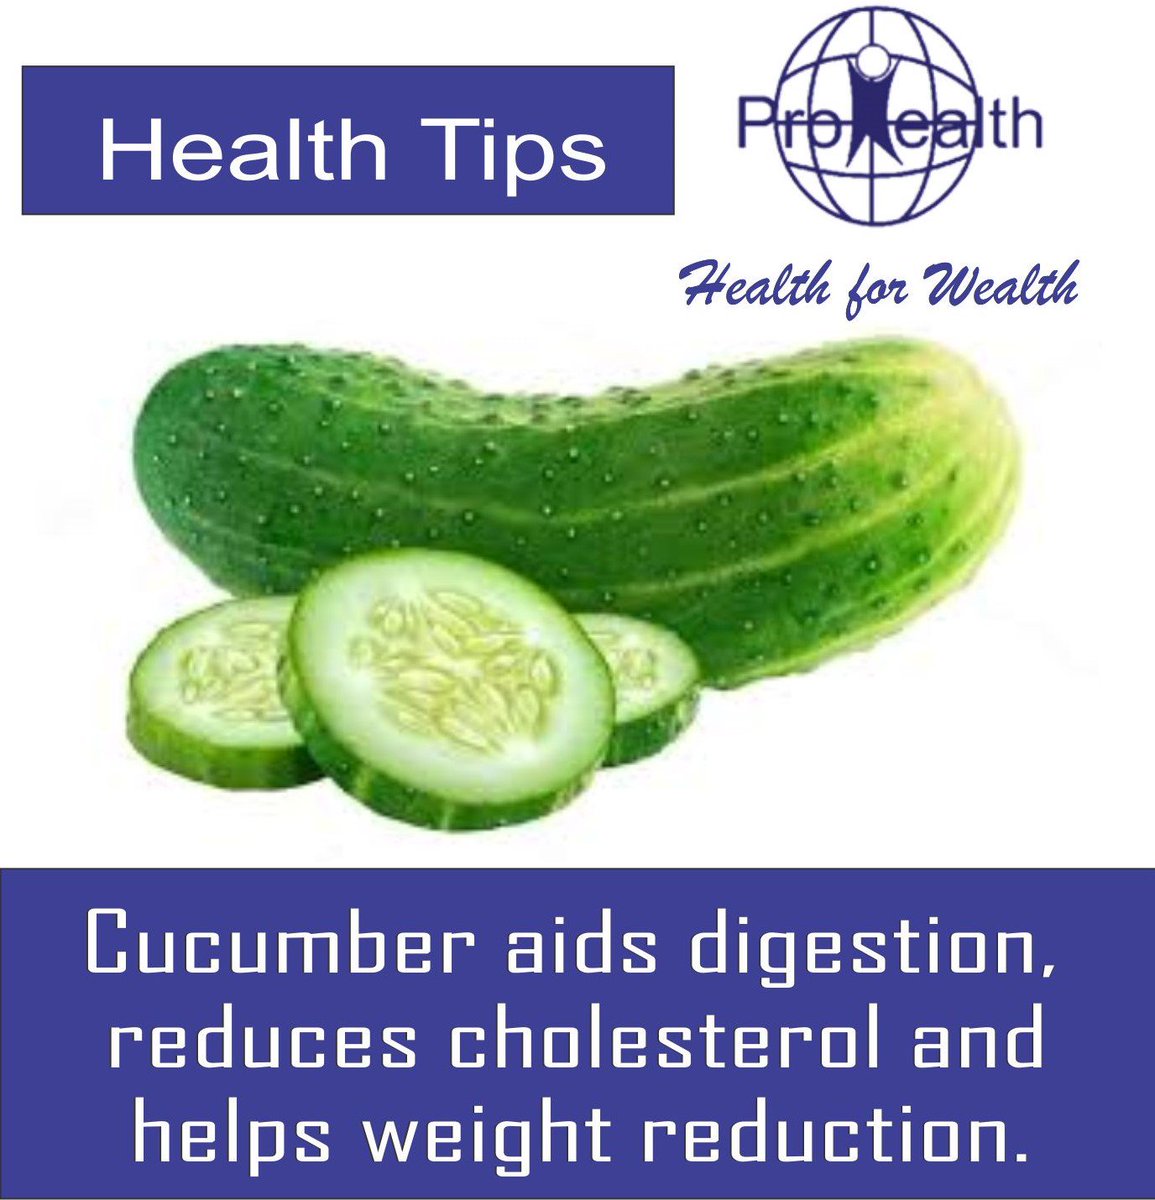 Health Tips 
#cucumber #digestion #reducecholesterol  #weightreduction #Healthtps #health #prohealthhmo #healthforwealth